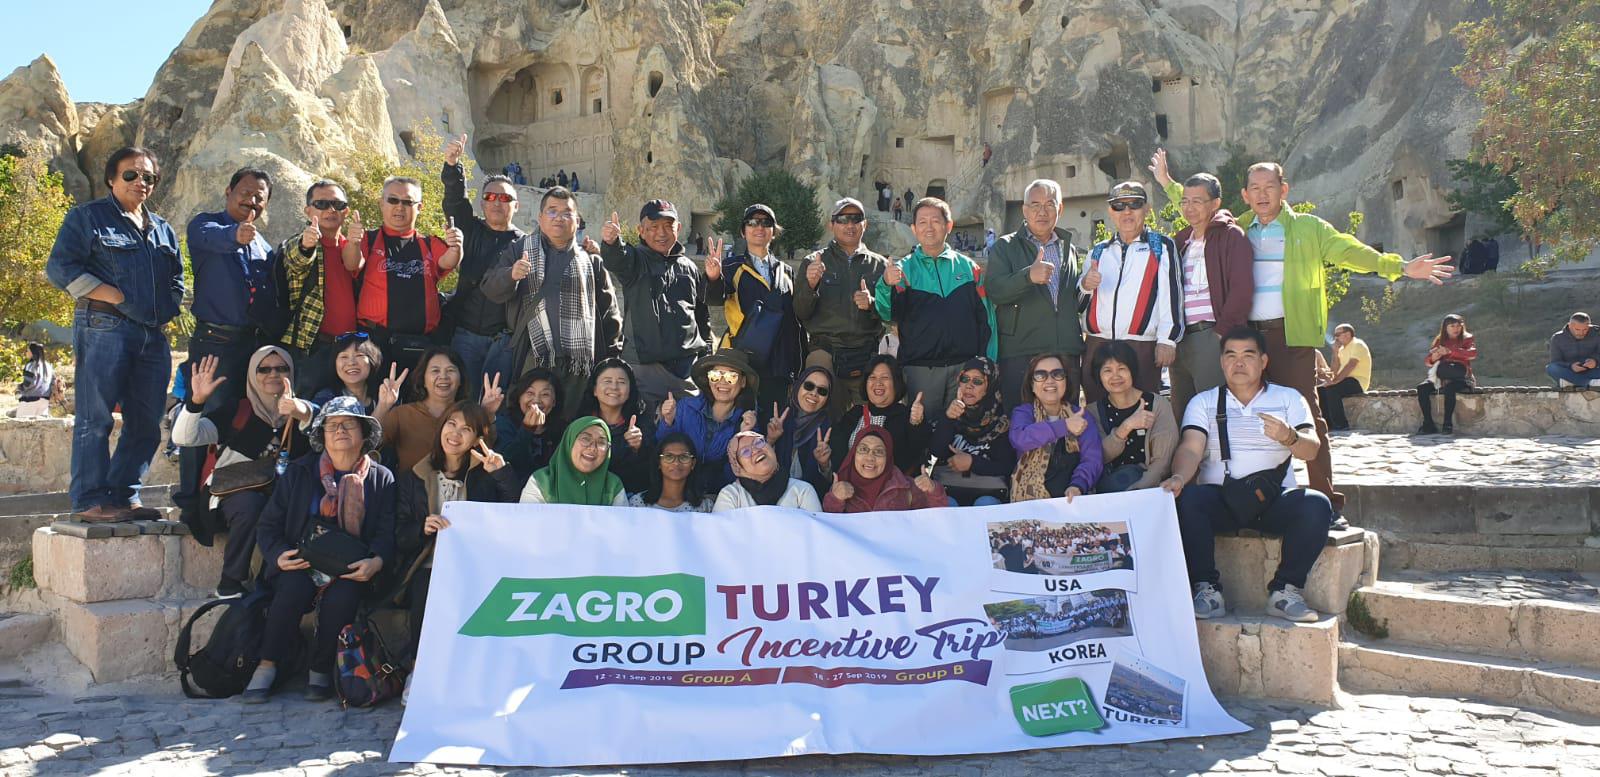 Zagro Group Corporate Incentive Trip Turkey-6